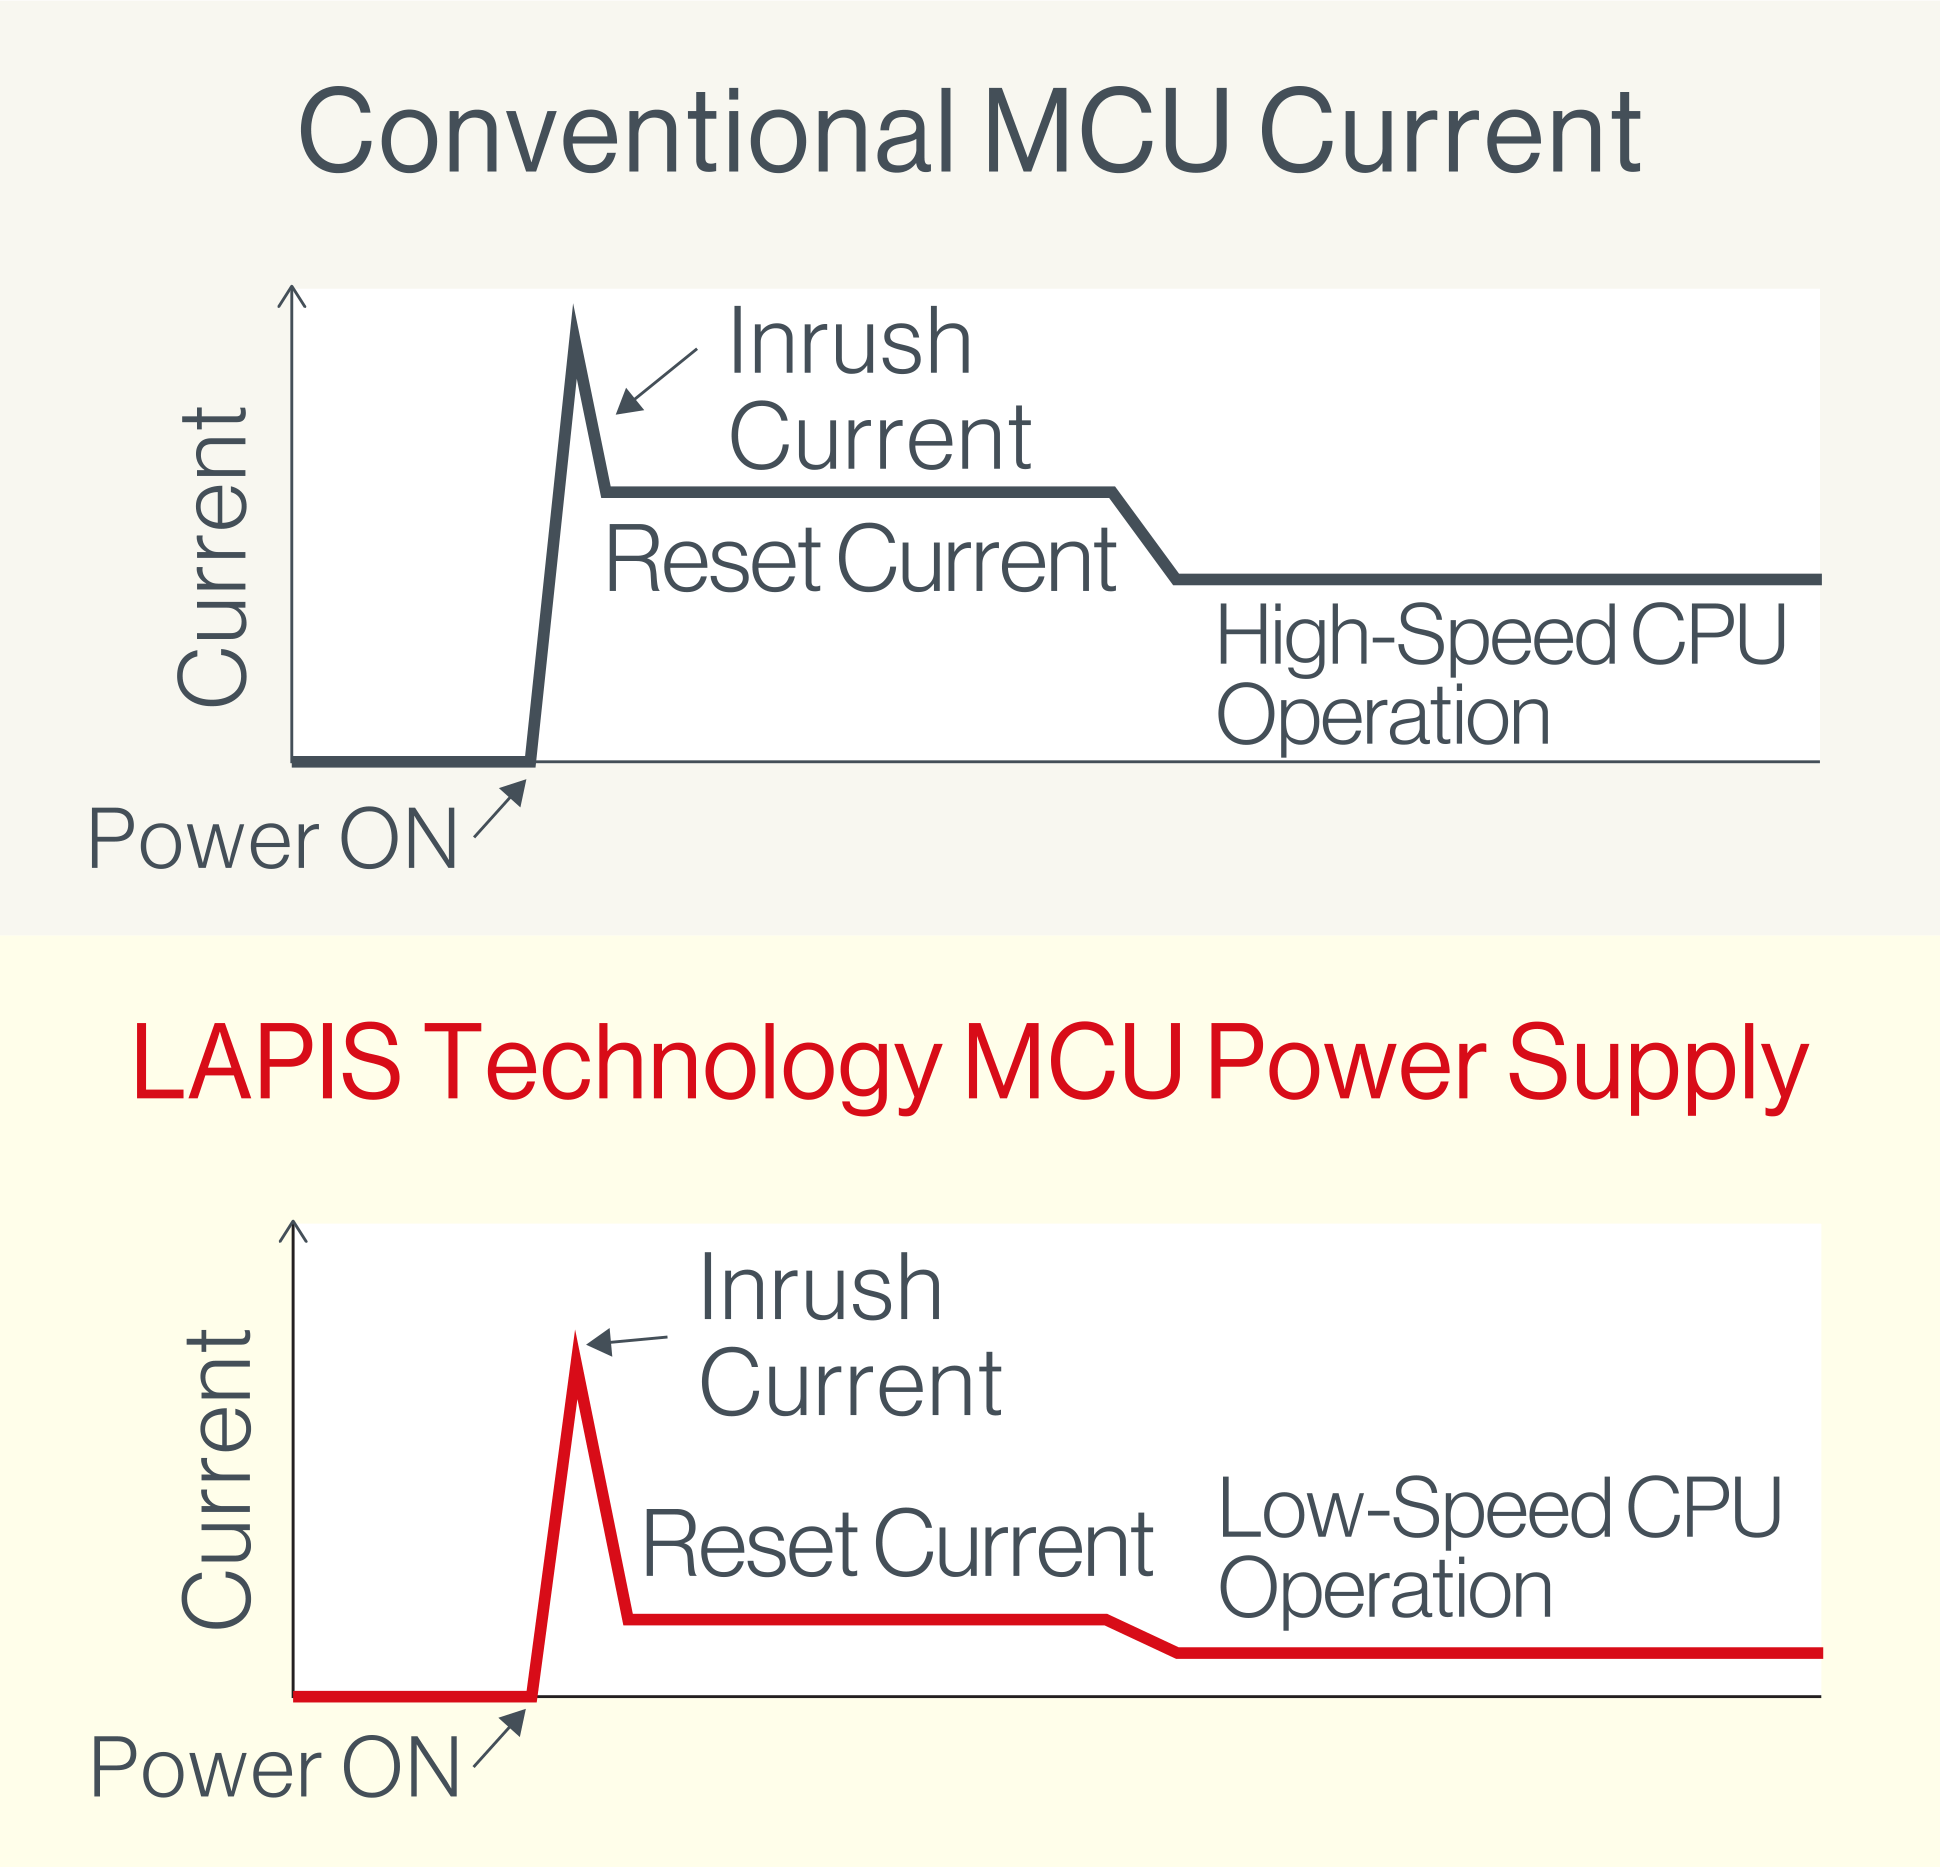 LAPIS Technology's MCU Power Supply